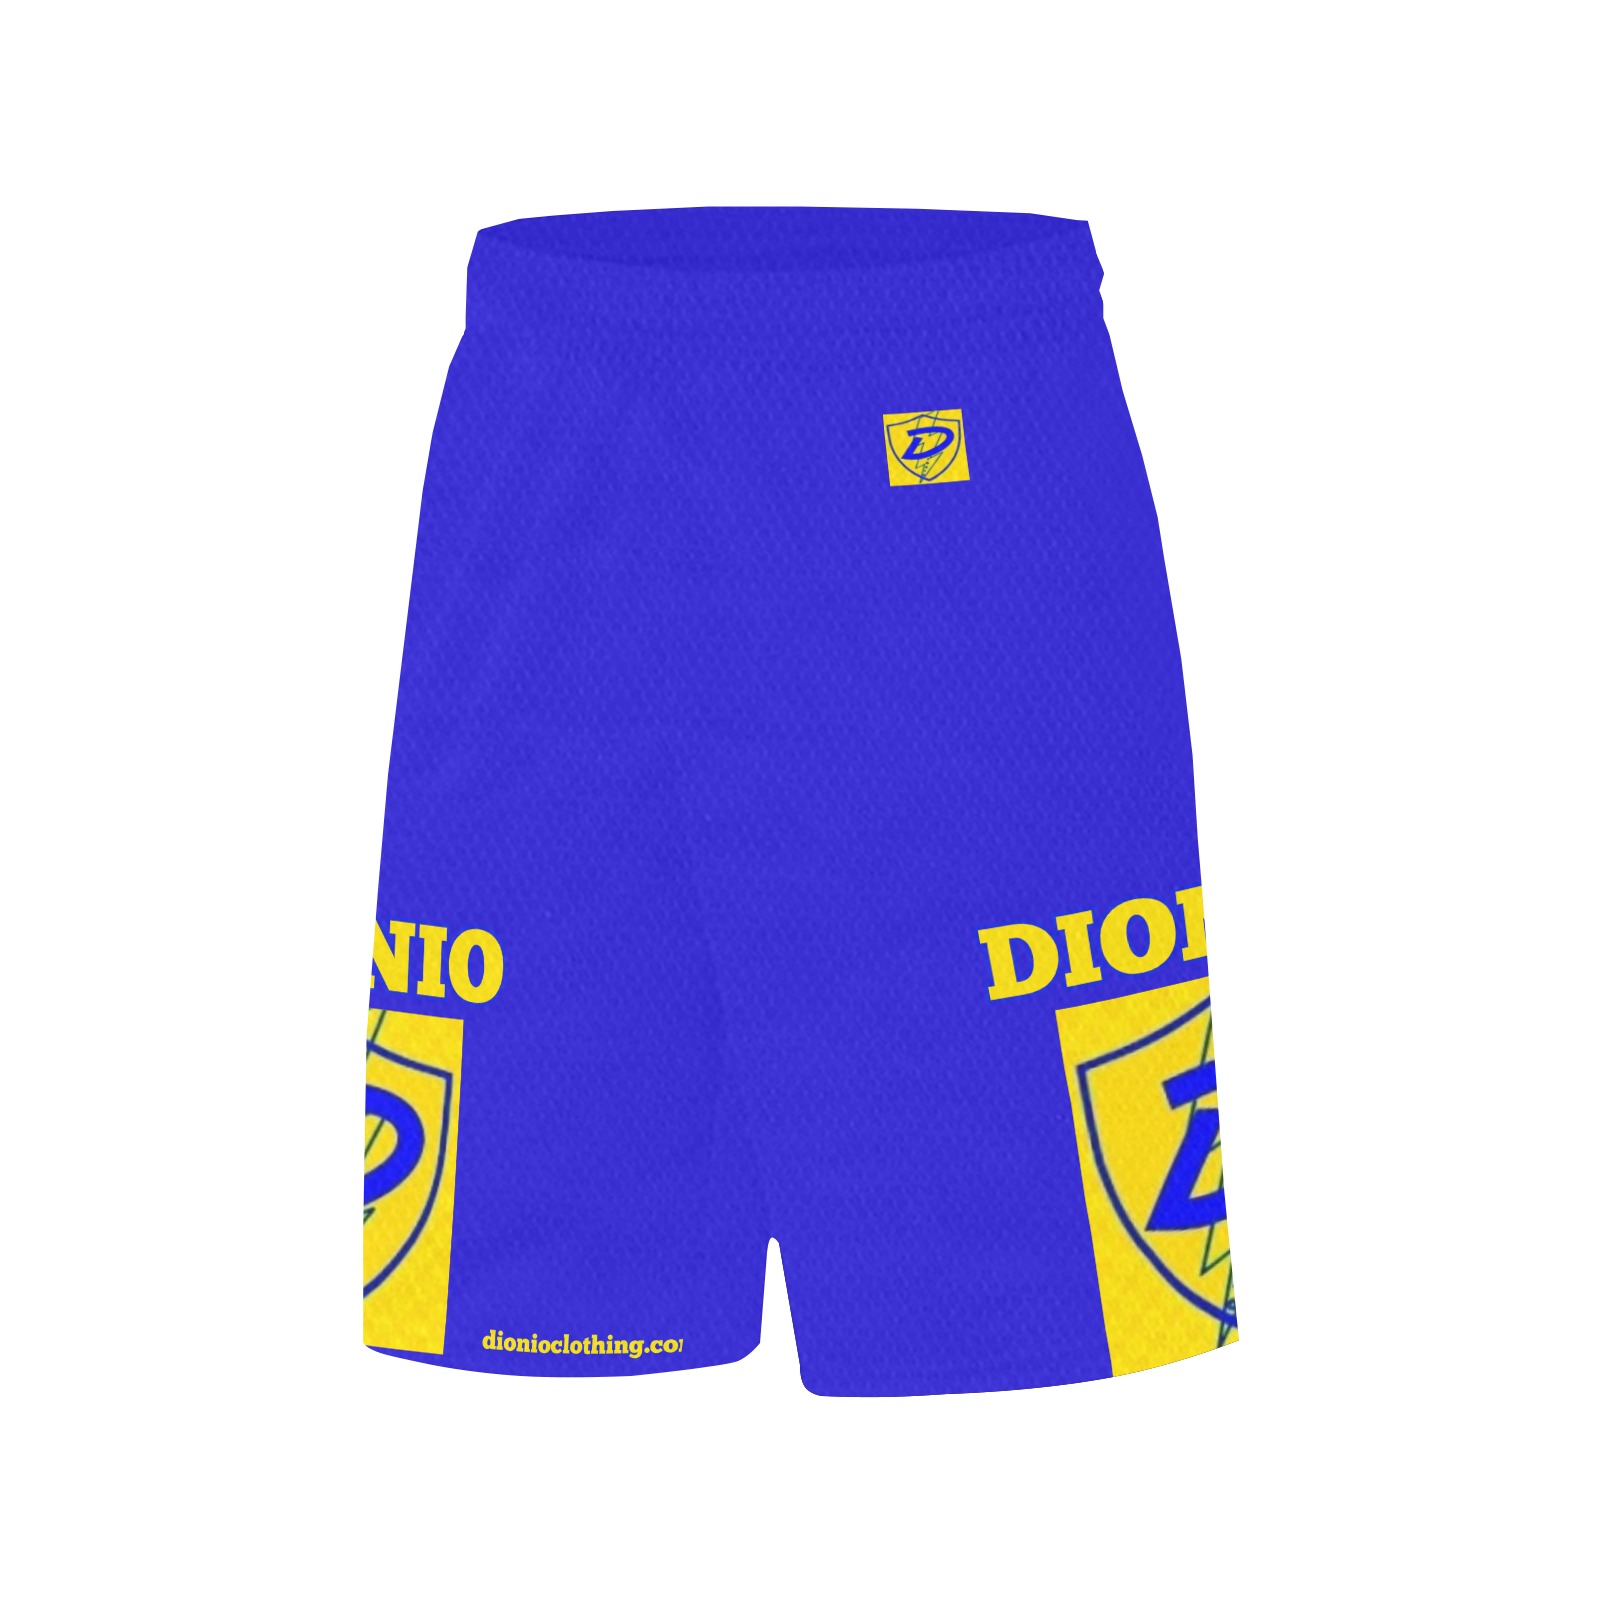 DIONIO Clothing - Blue & Yellow Basketball Shorts (Yellow D-Shield Logo) All Over Print Basketball Shorts